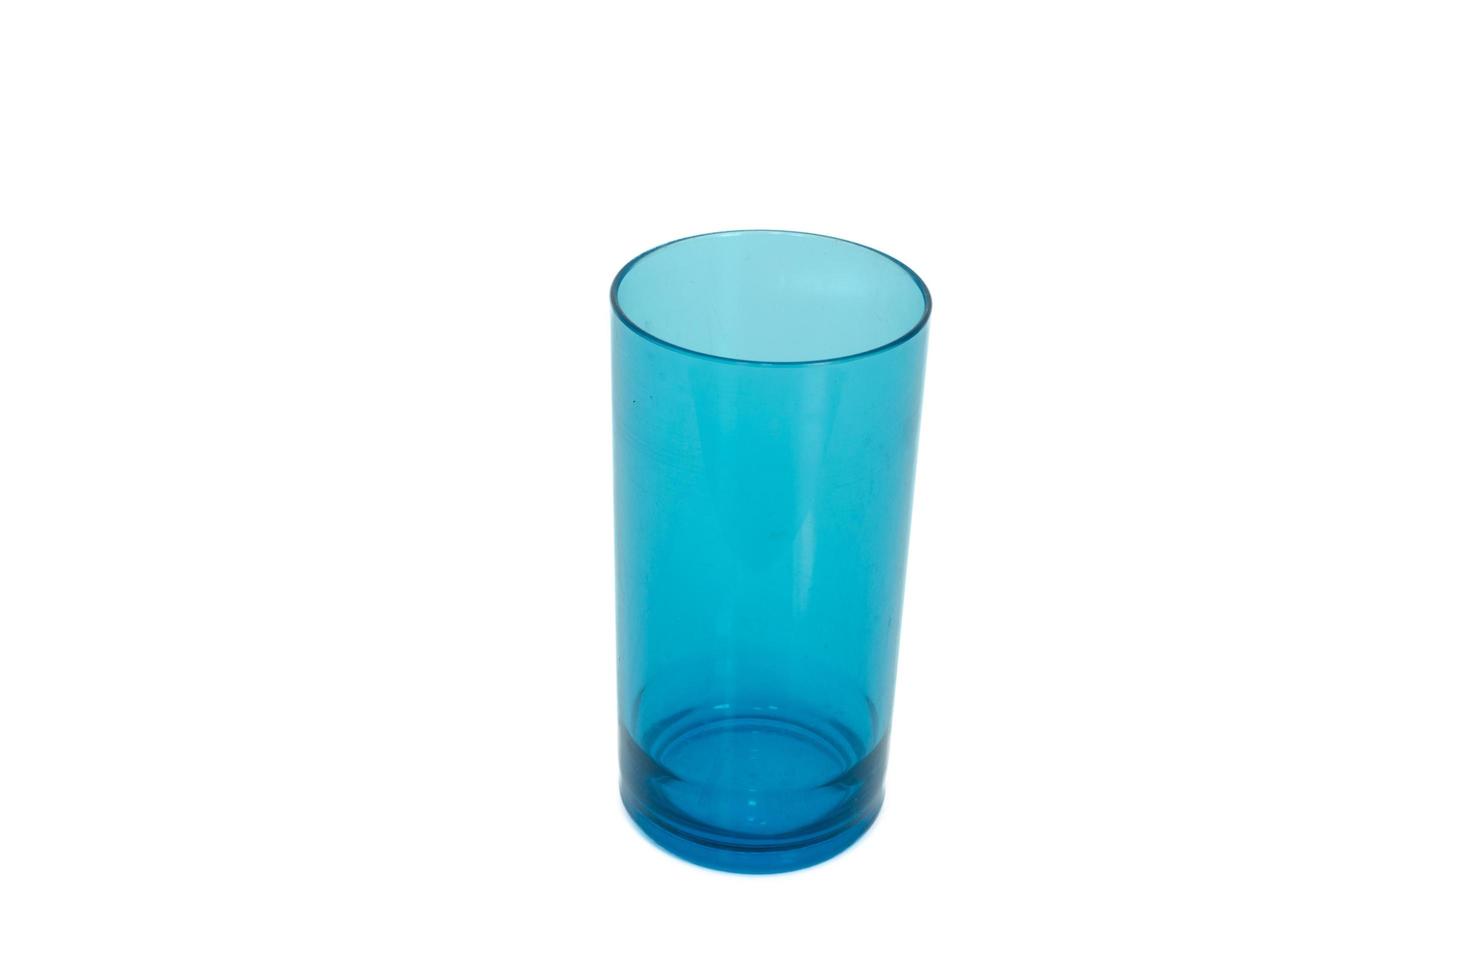 vidro azul em fundo branco foto